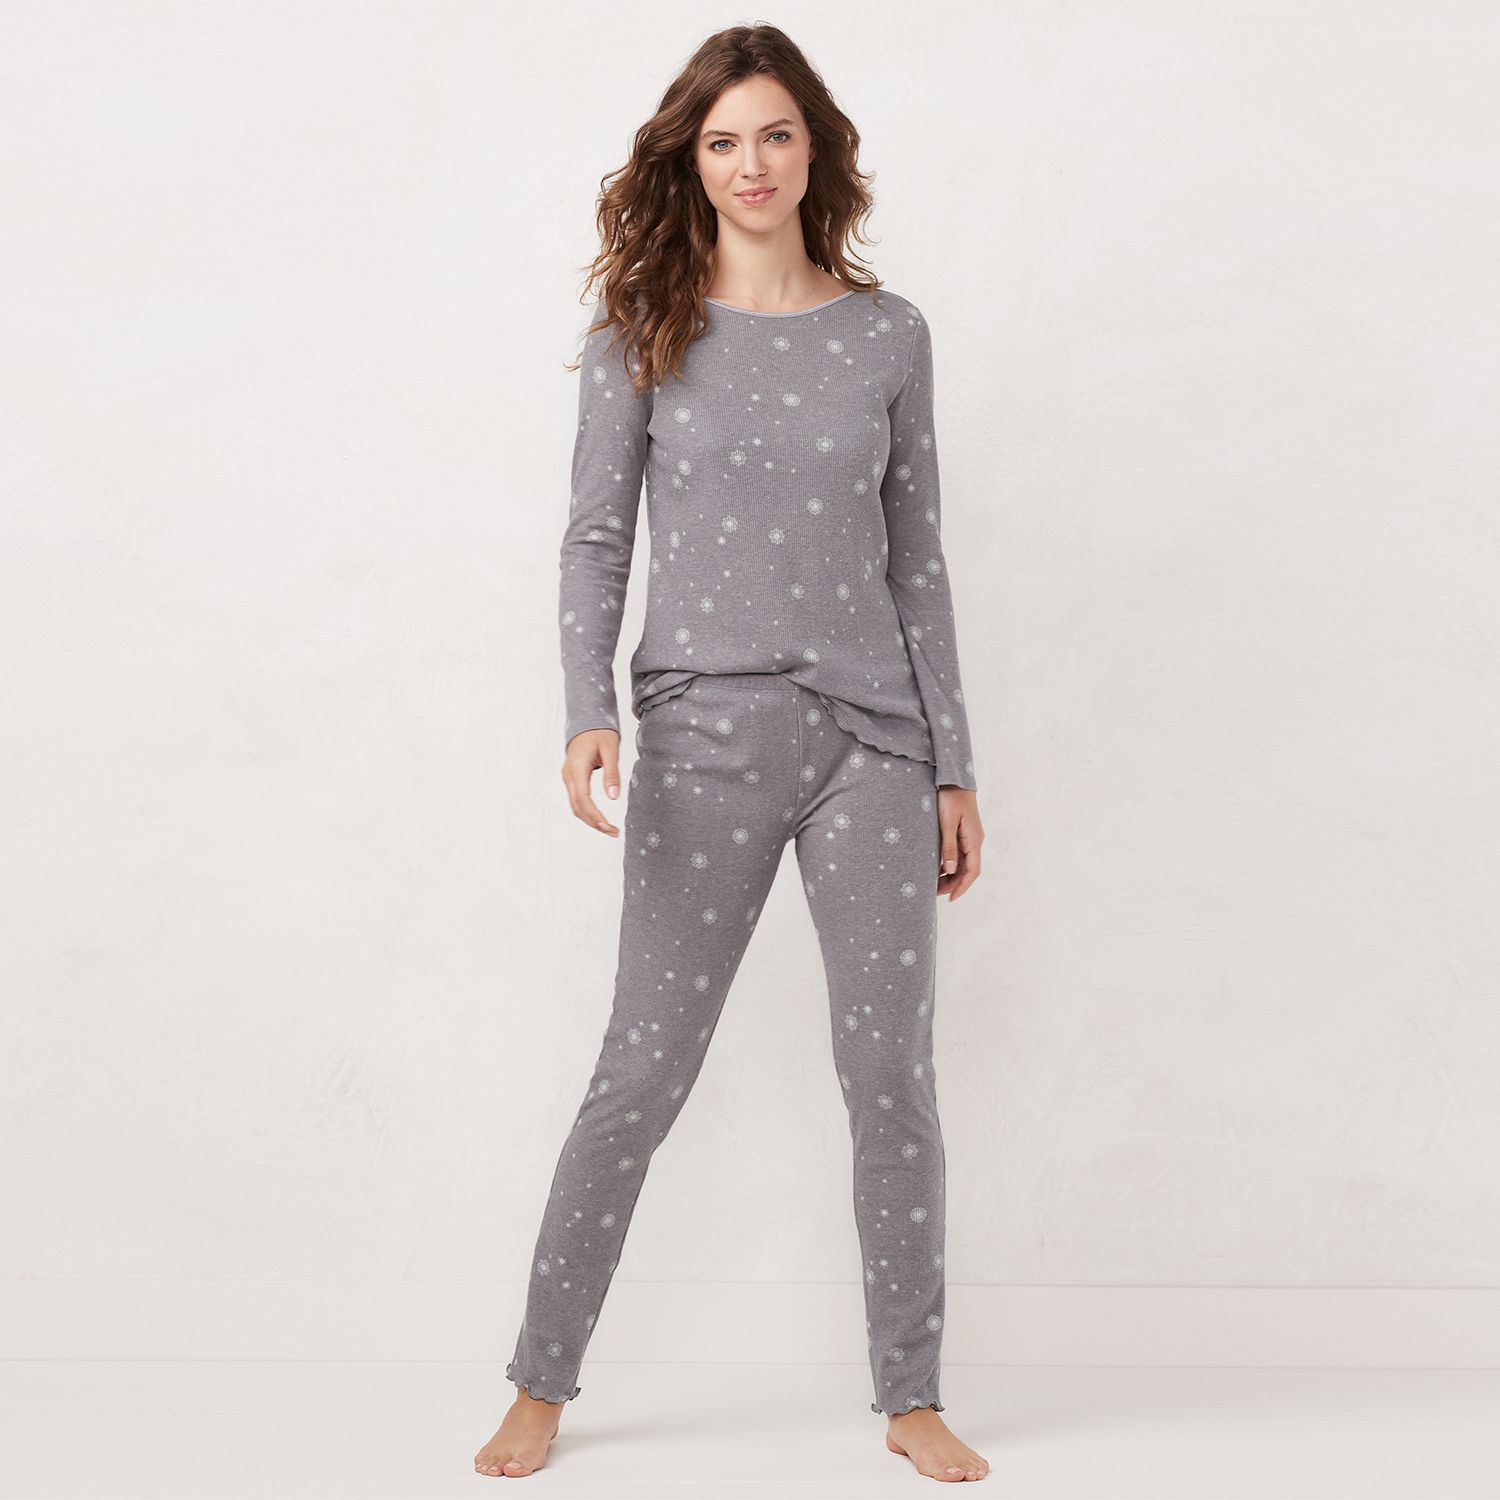 lauren conrad pajamas womens - Enjoy free shipping - OFF 61%